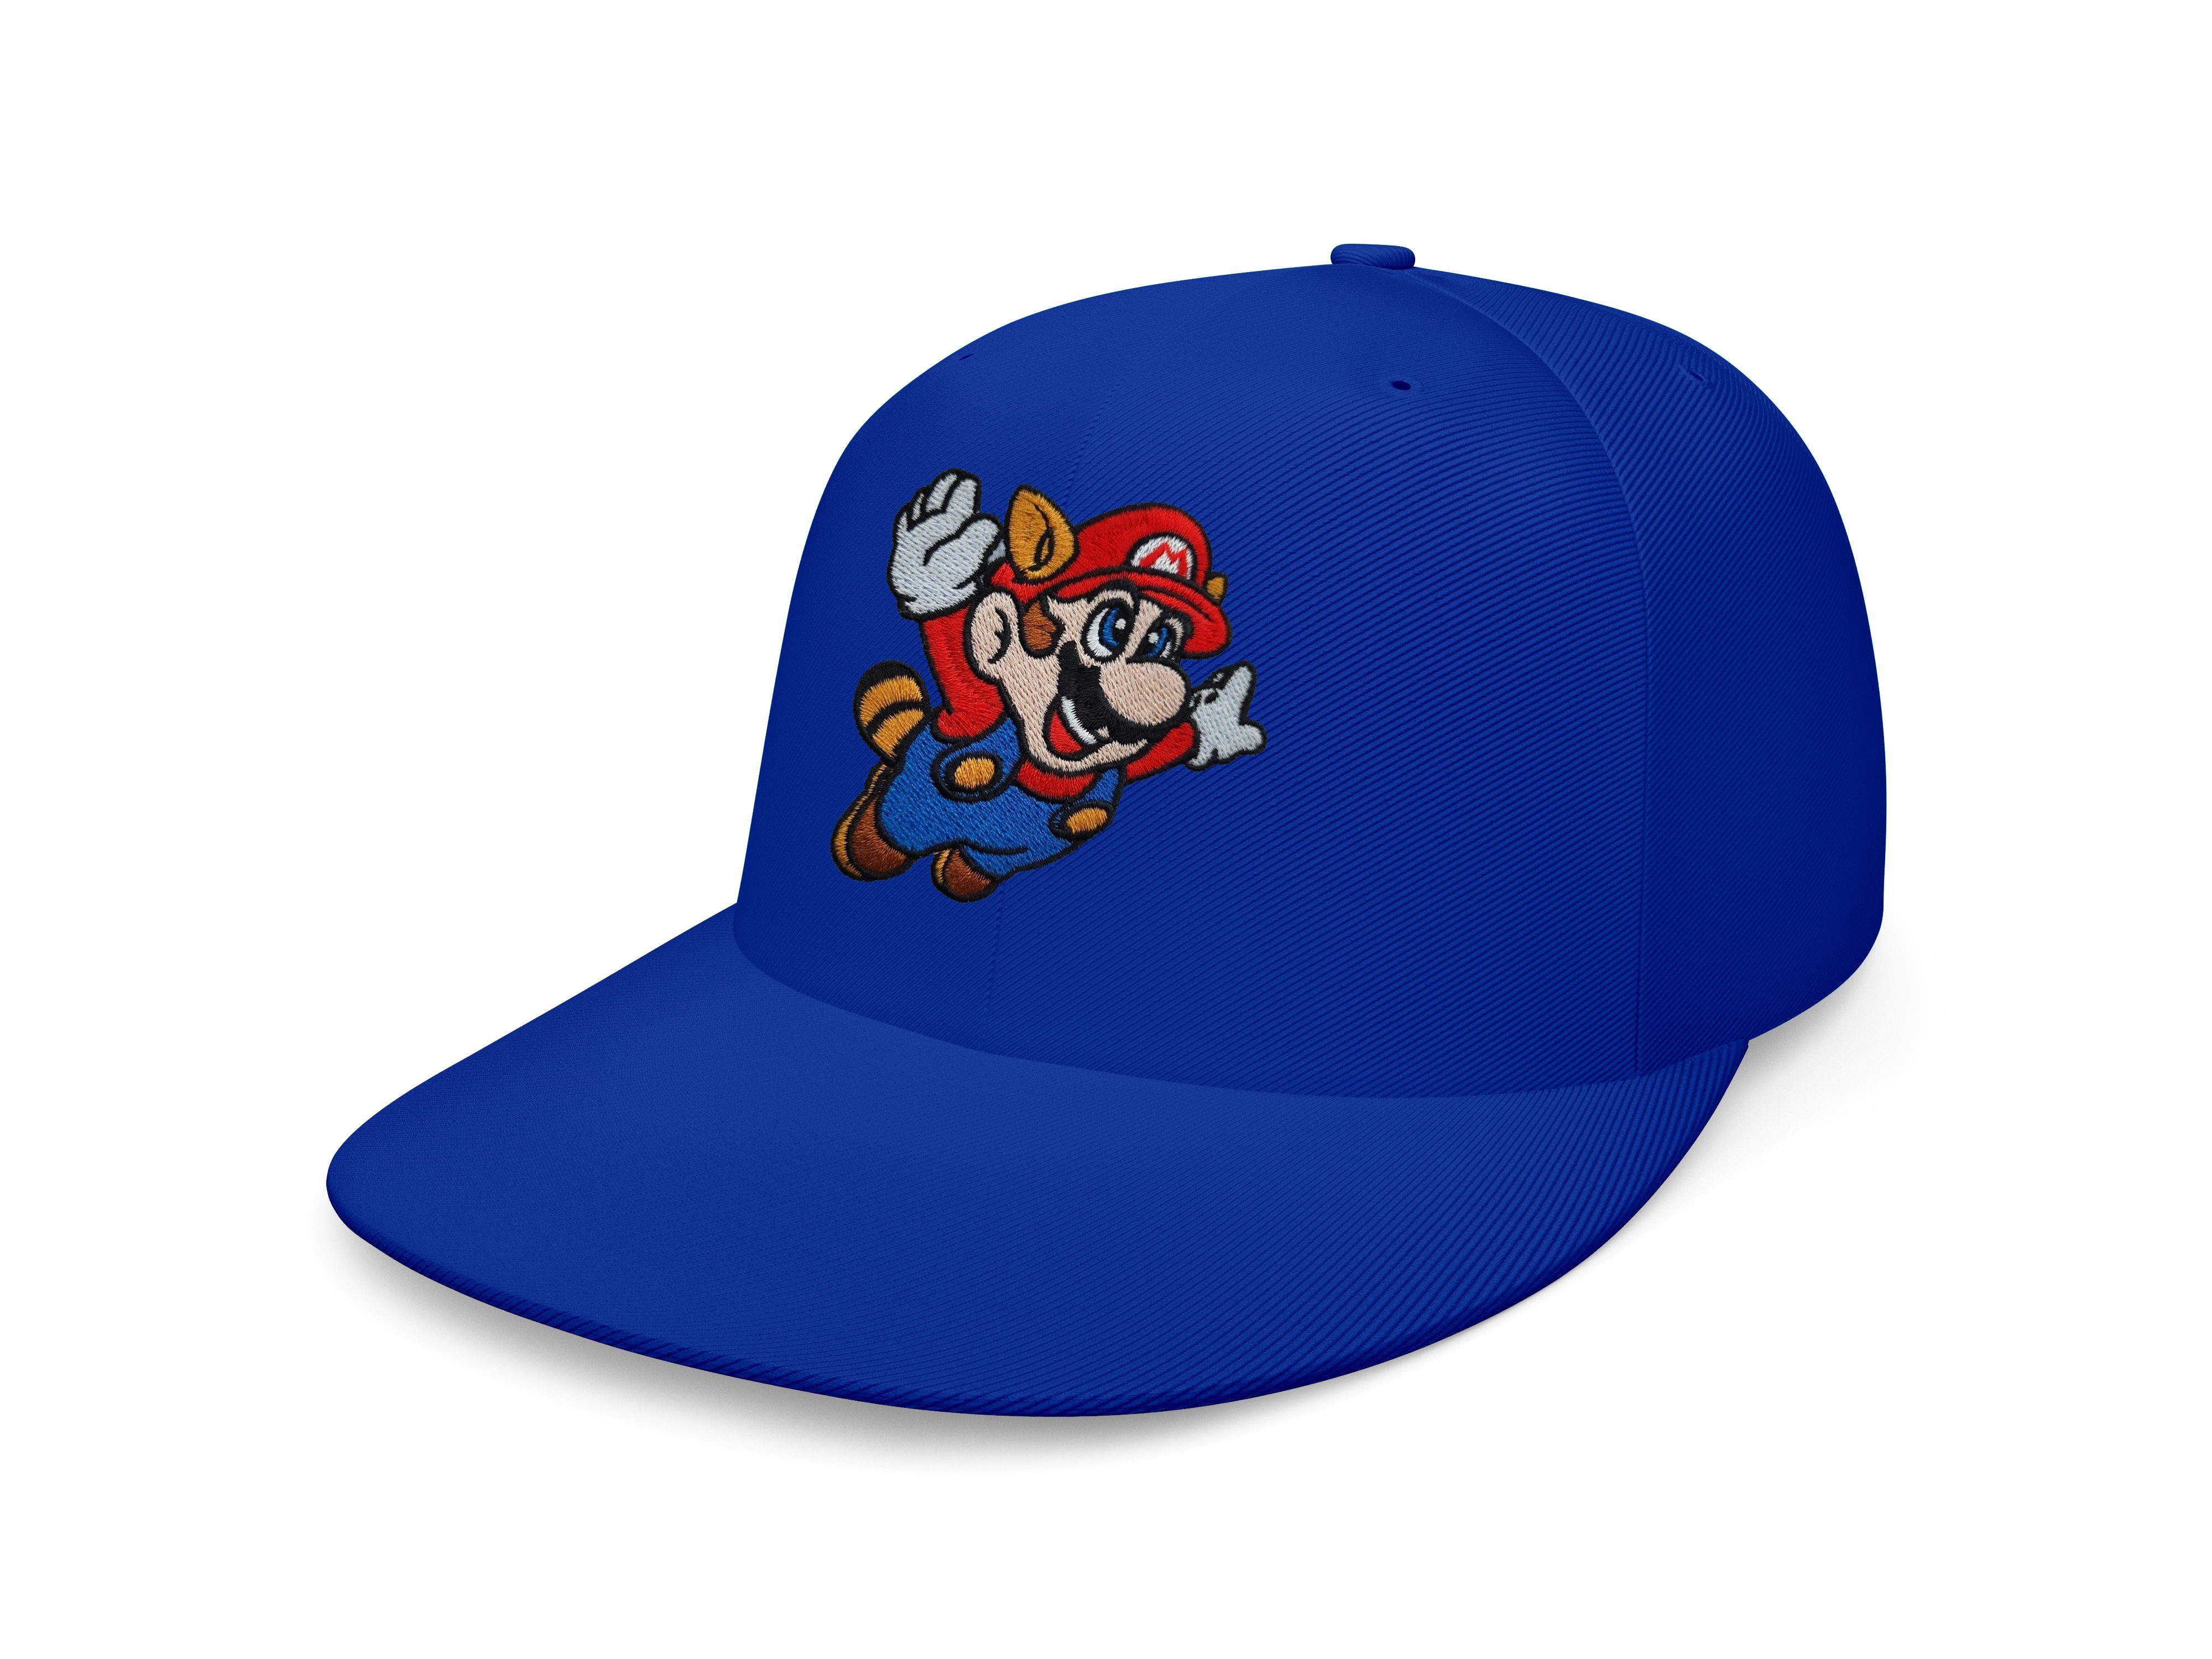 & Royalblau Blondie Baseball Nintendo Mario Brownie Luigi Erwachsene Patch Fligh Stick Unisex Snapback Cap